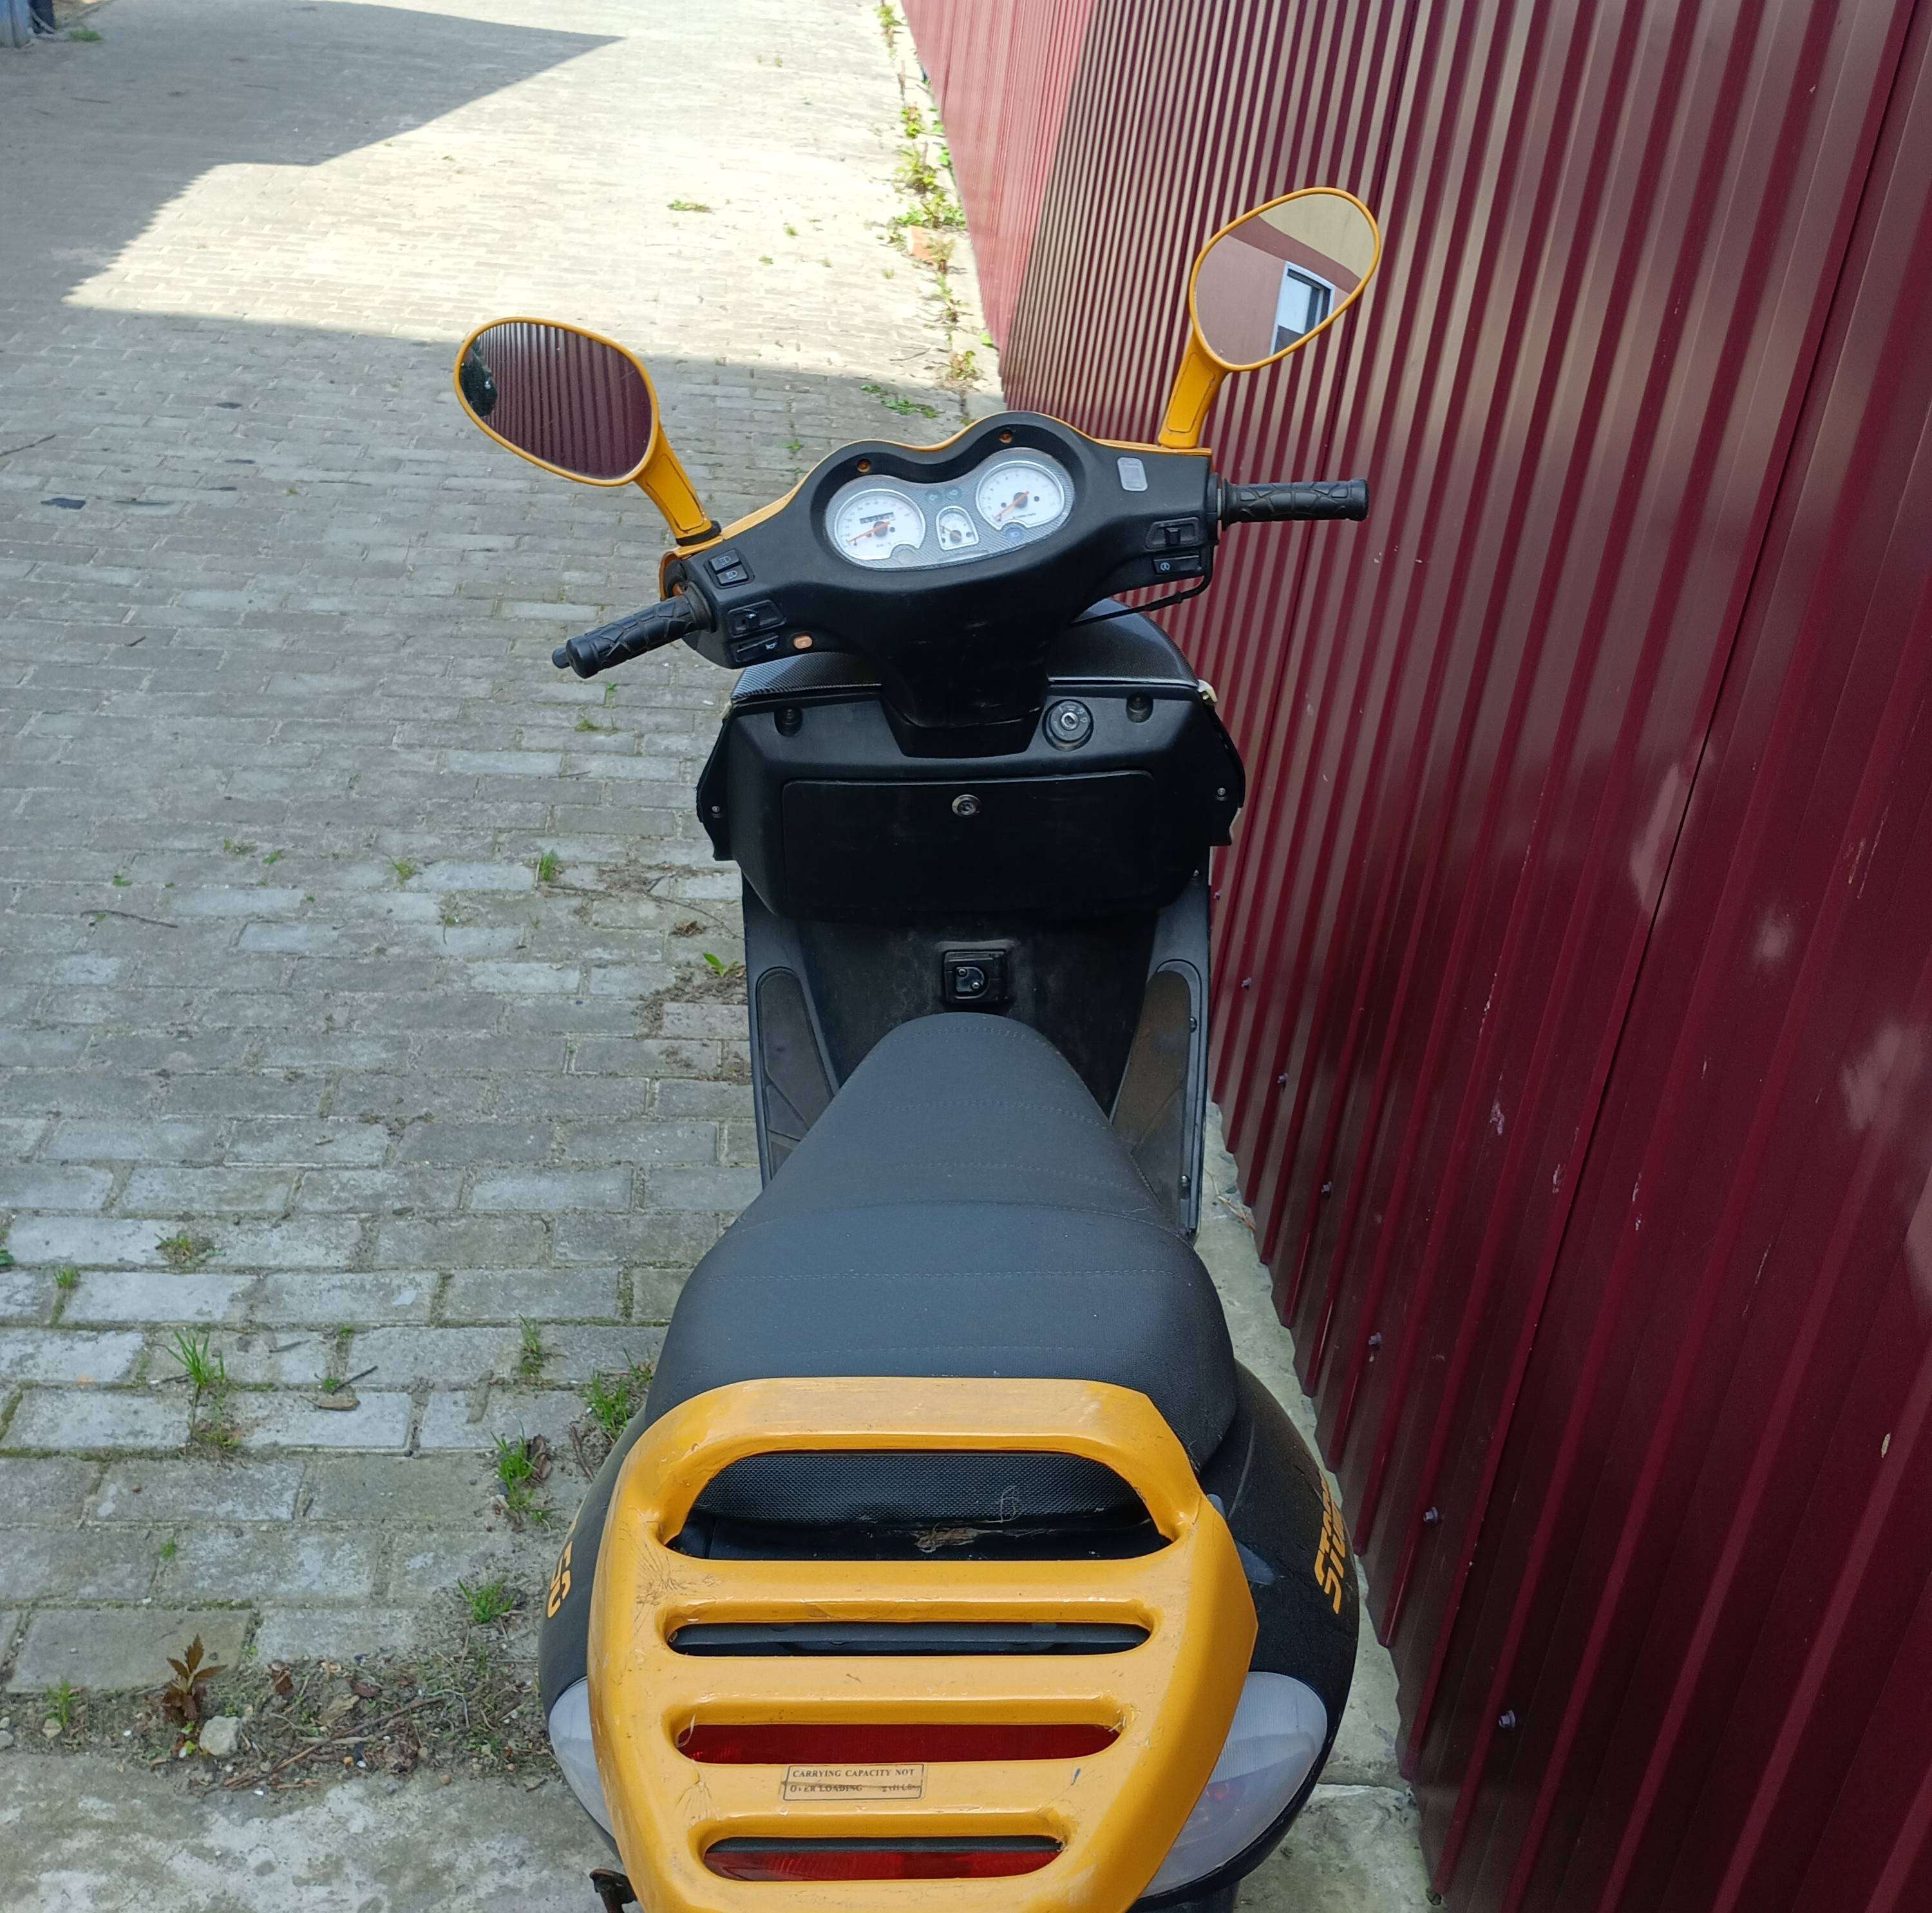 Купить скутер Viper в Беларуси в кредит - цены, характеристики, фото.